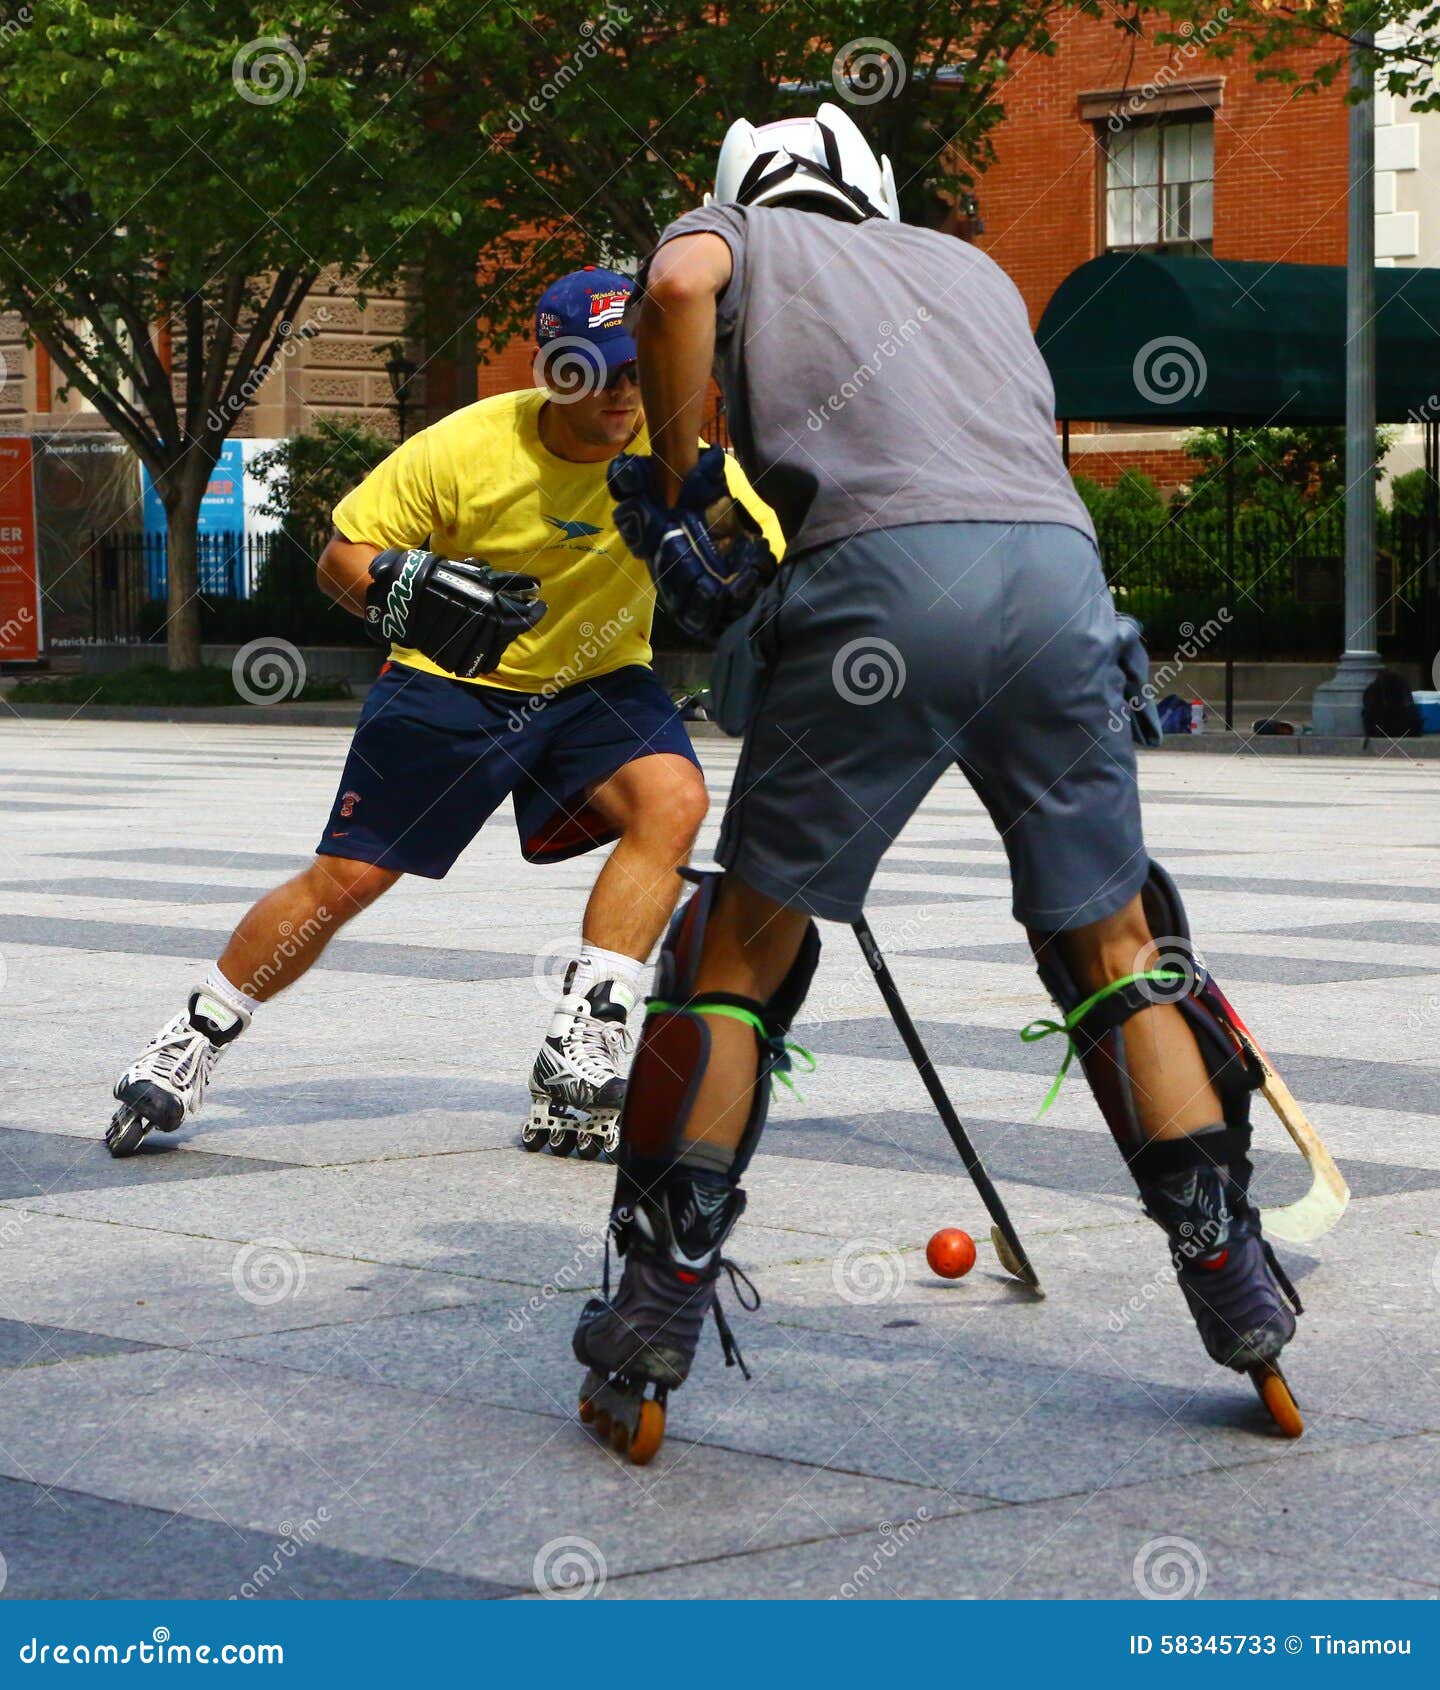 play roller hockey  Inline hockey, Street hockey, Inline skating